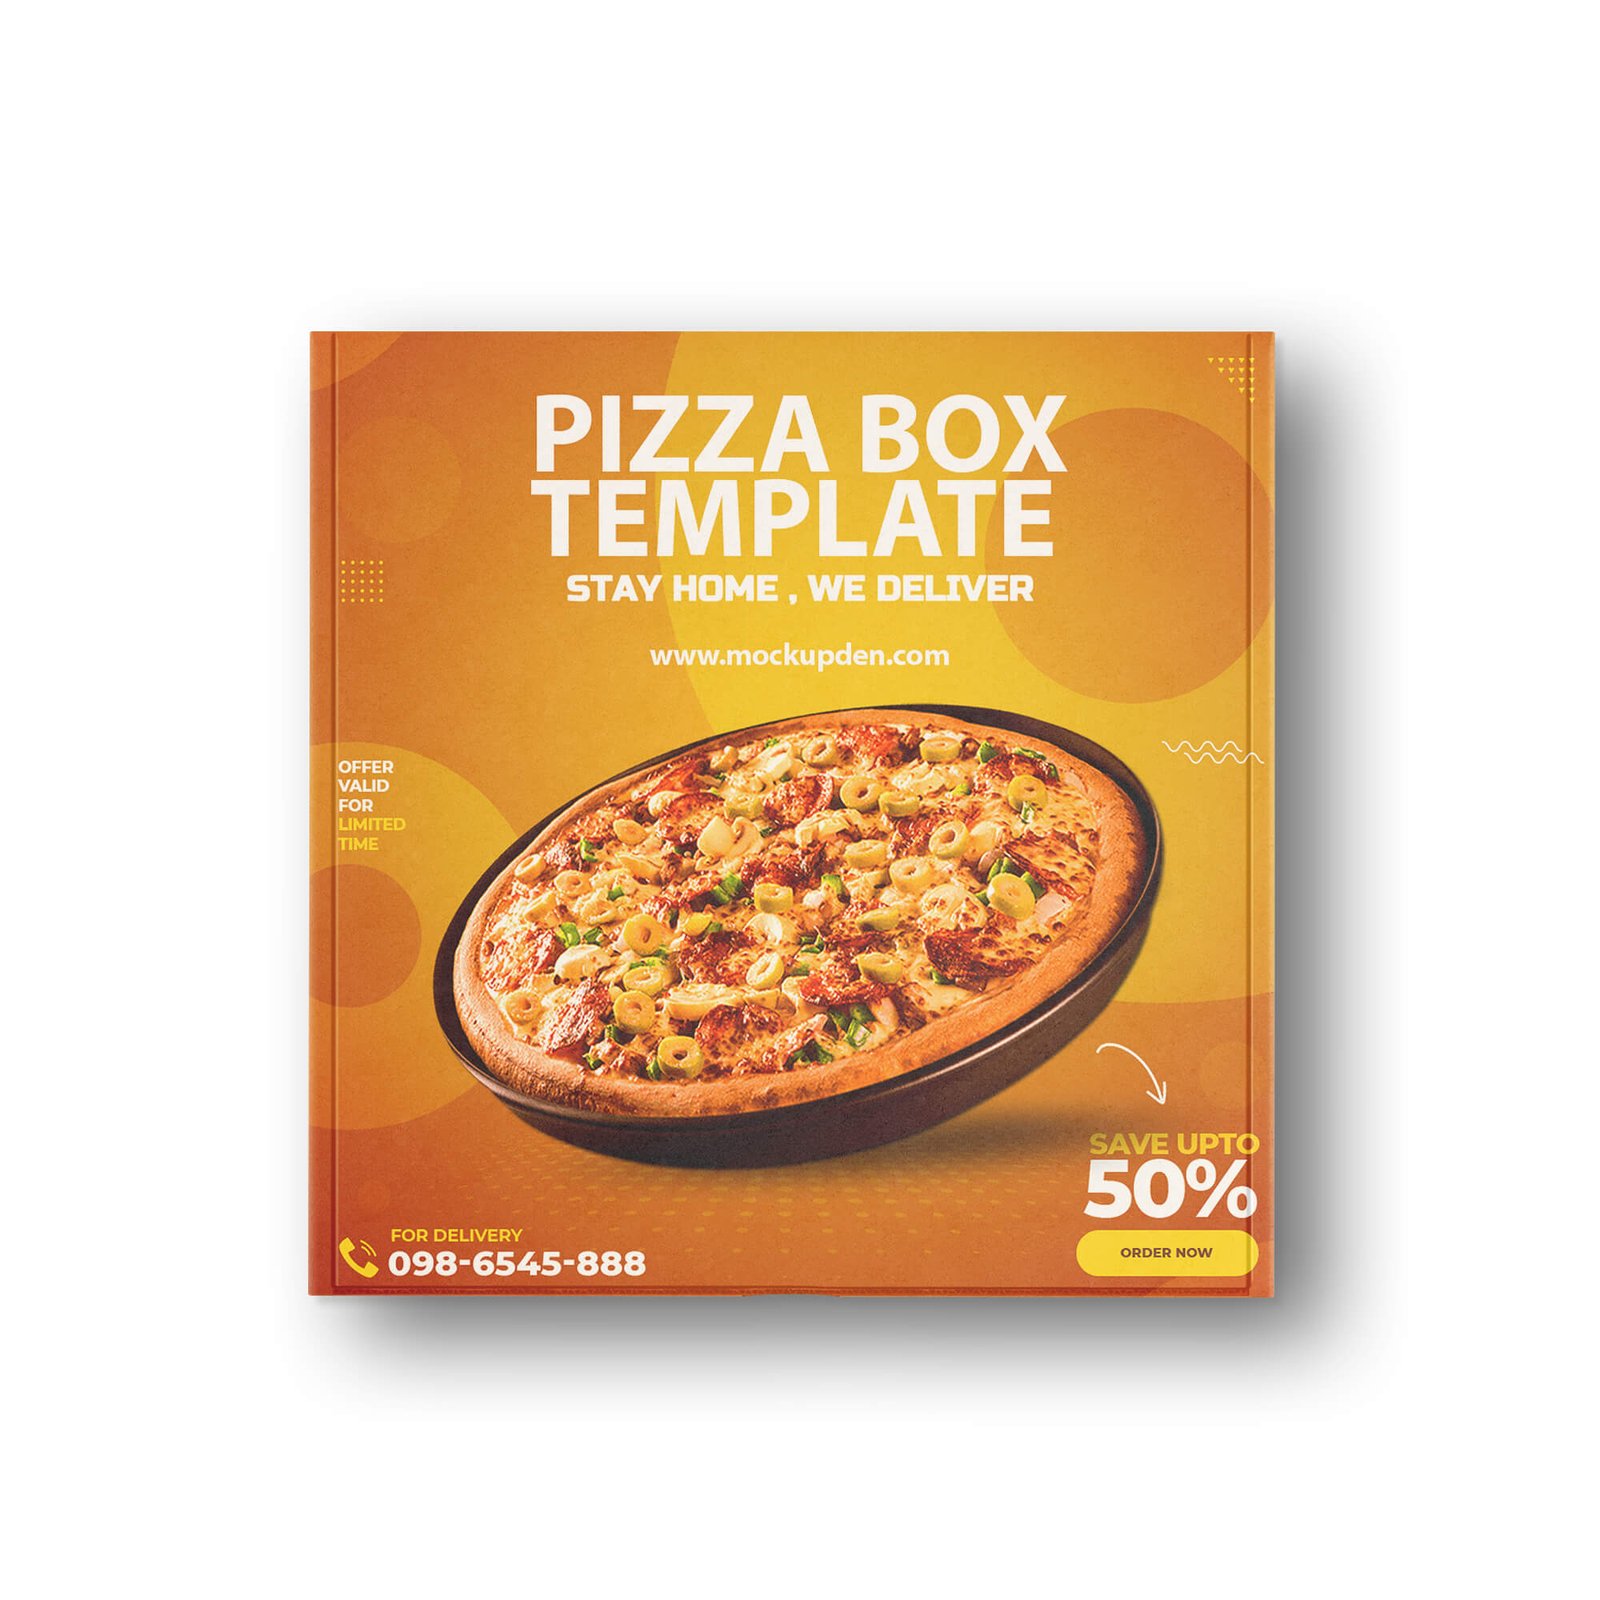 Design Free Pizza Box Template PSD Mockup